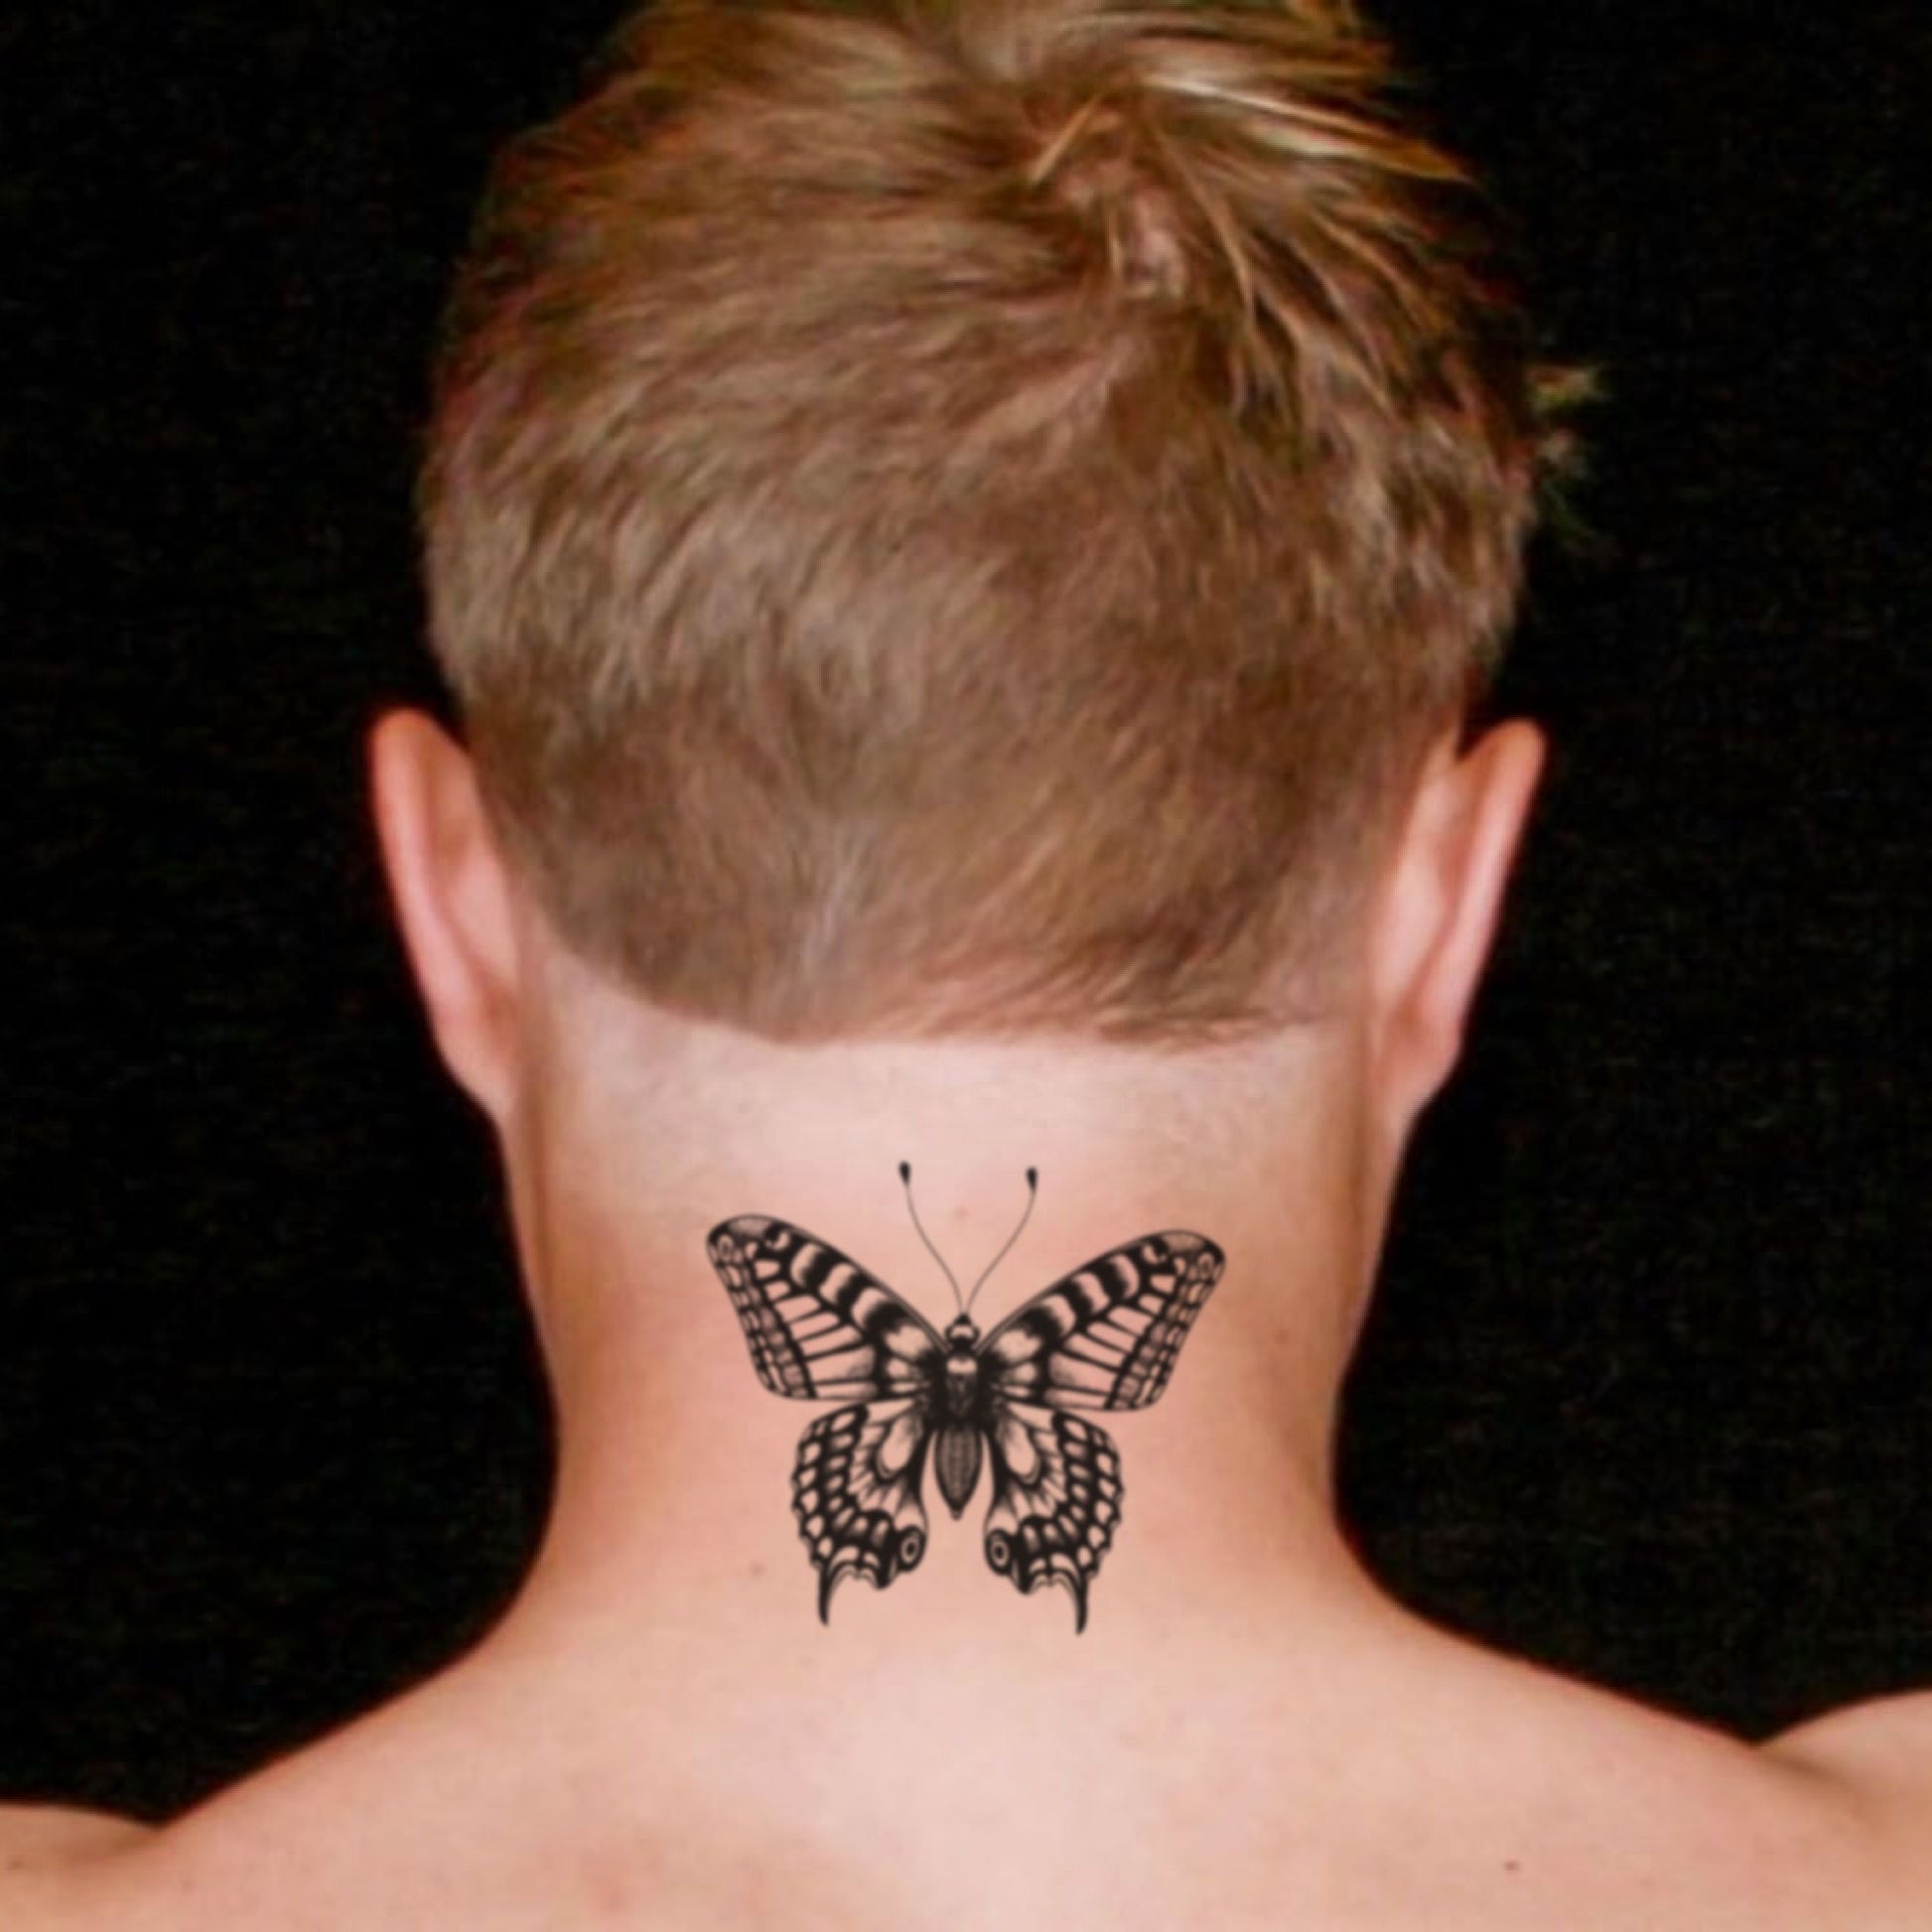 fake medium butterfly men animal temporary tattoo sticker design idea on neck